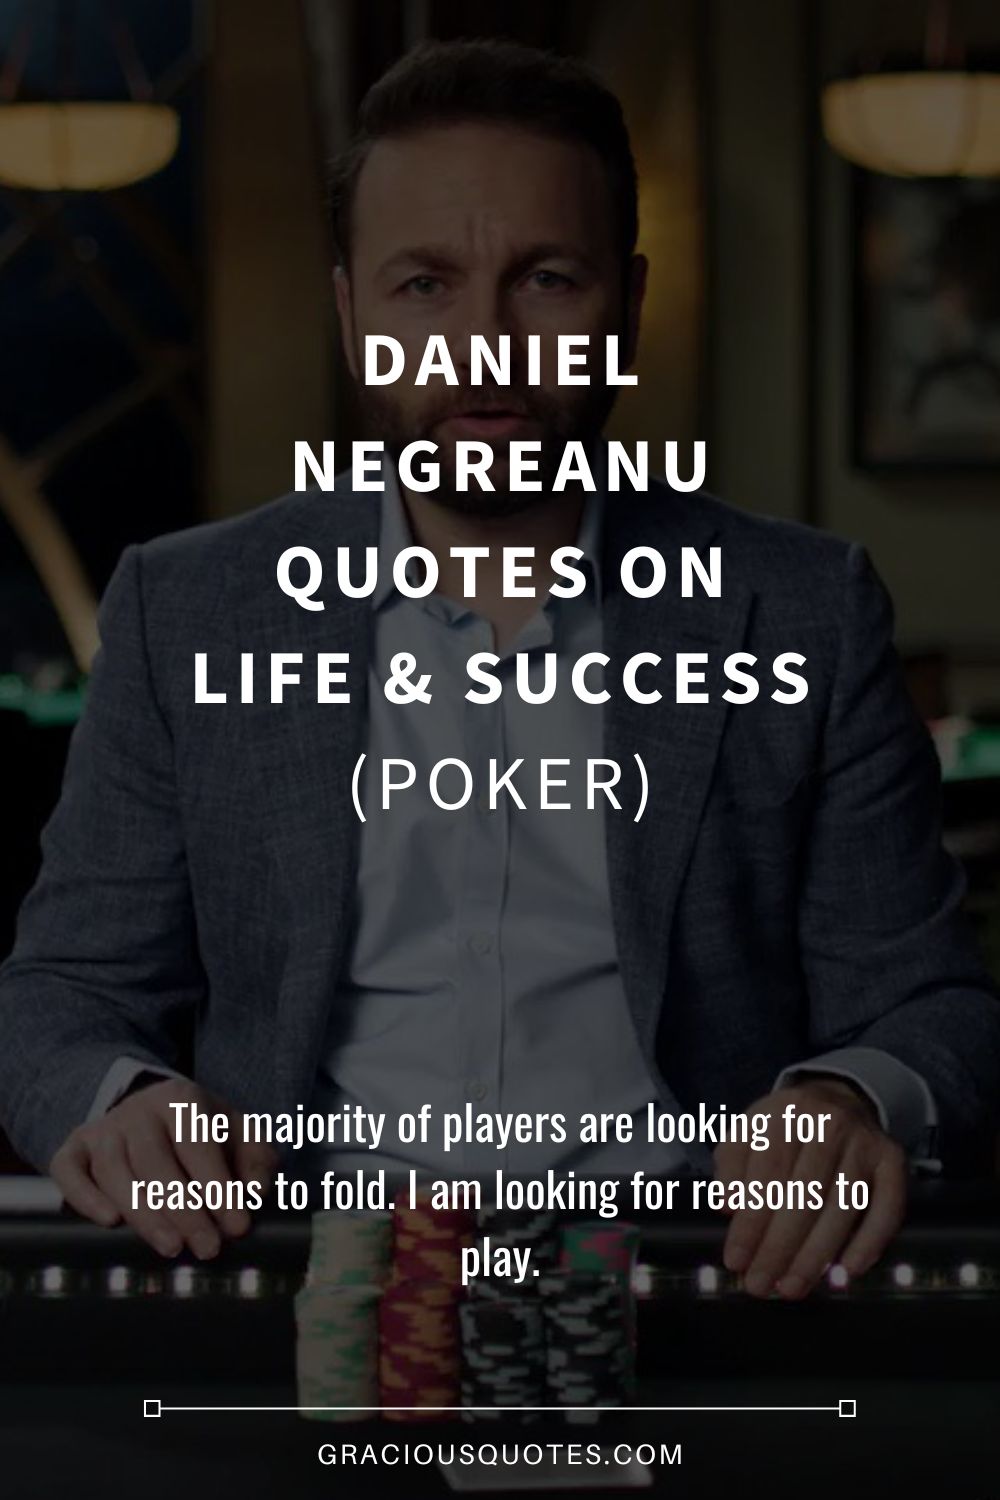 Daniel Negreanu Quotes on Life & Success (POKER) - Gracious Quotes